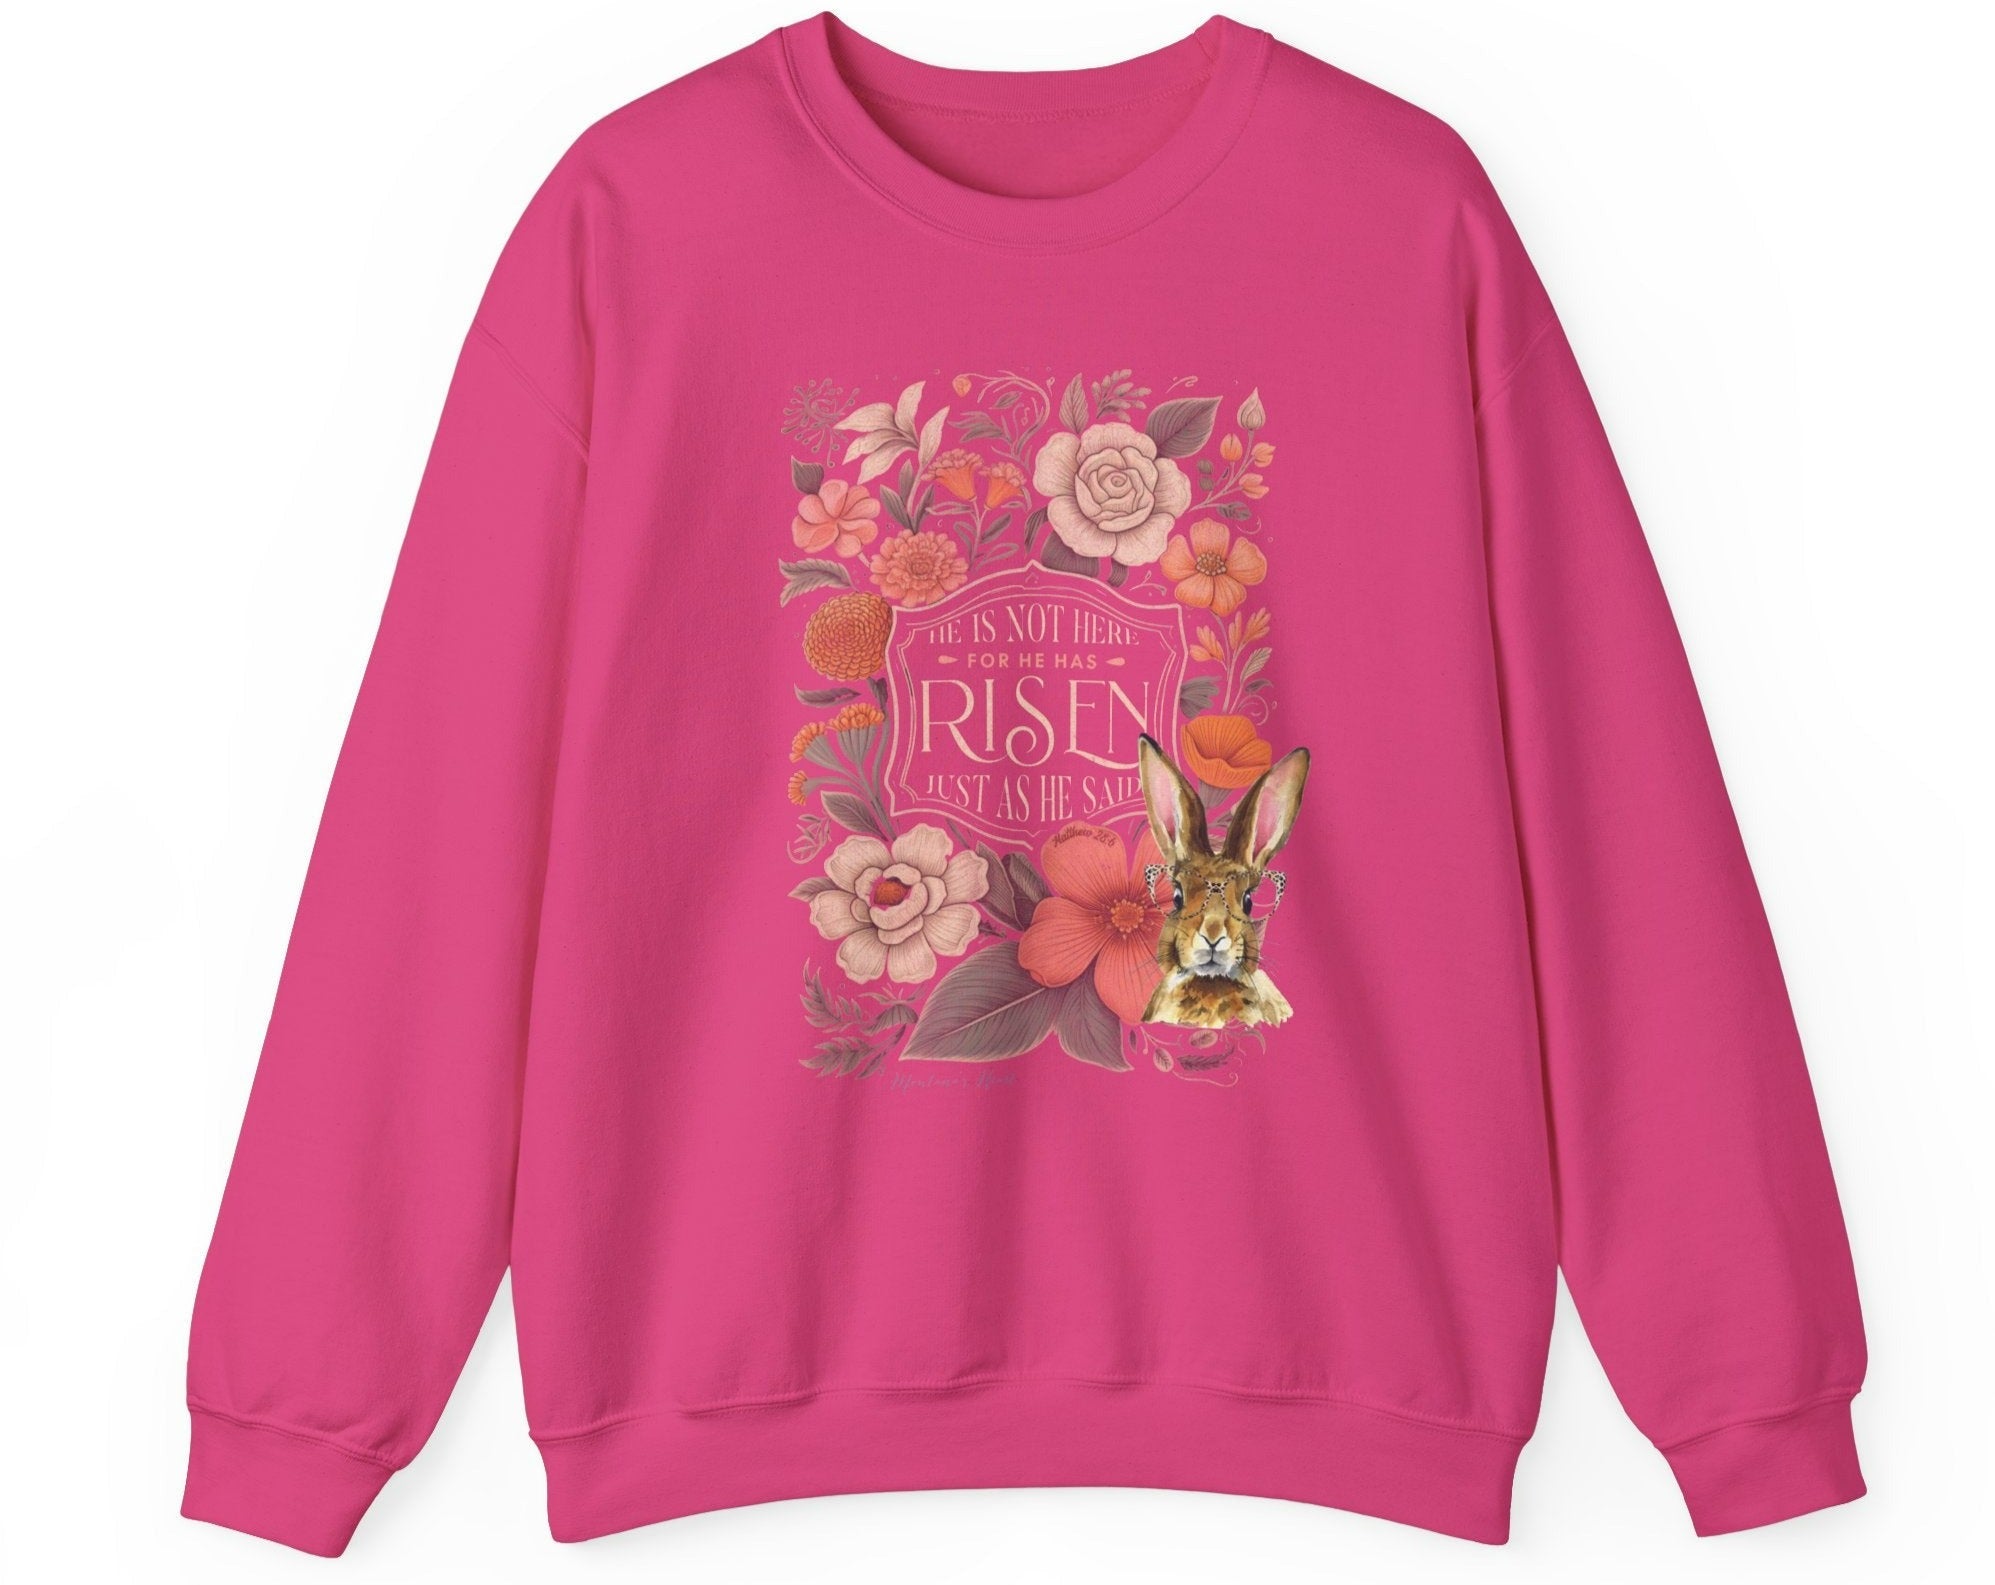 He is Risen Easter Ladies heavy weight sweatshirt  with cute bunny artwork.